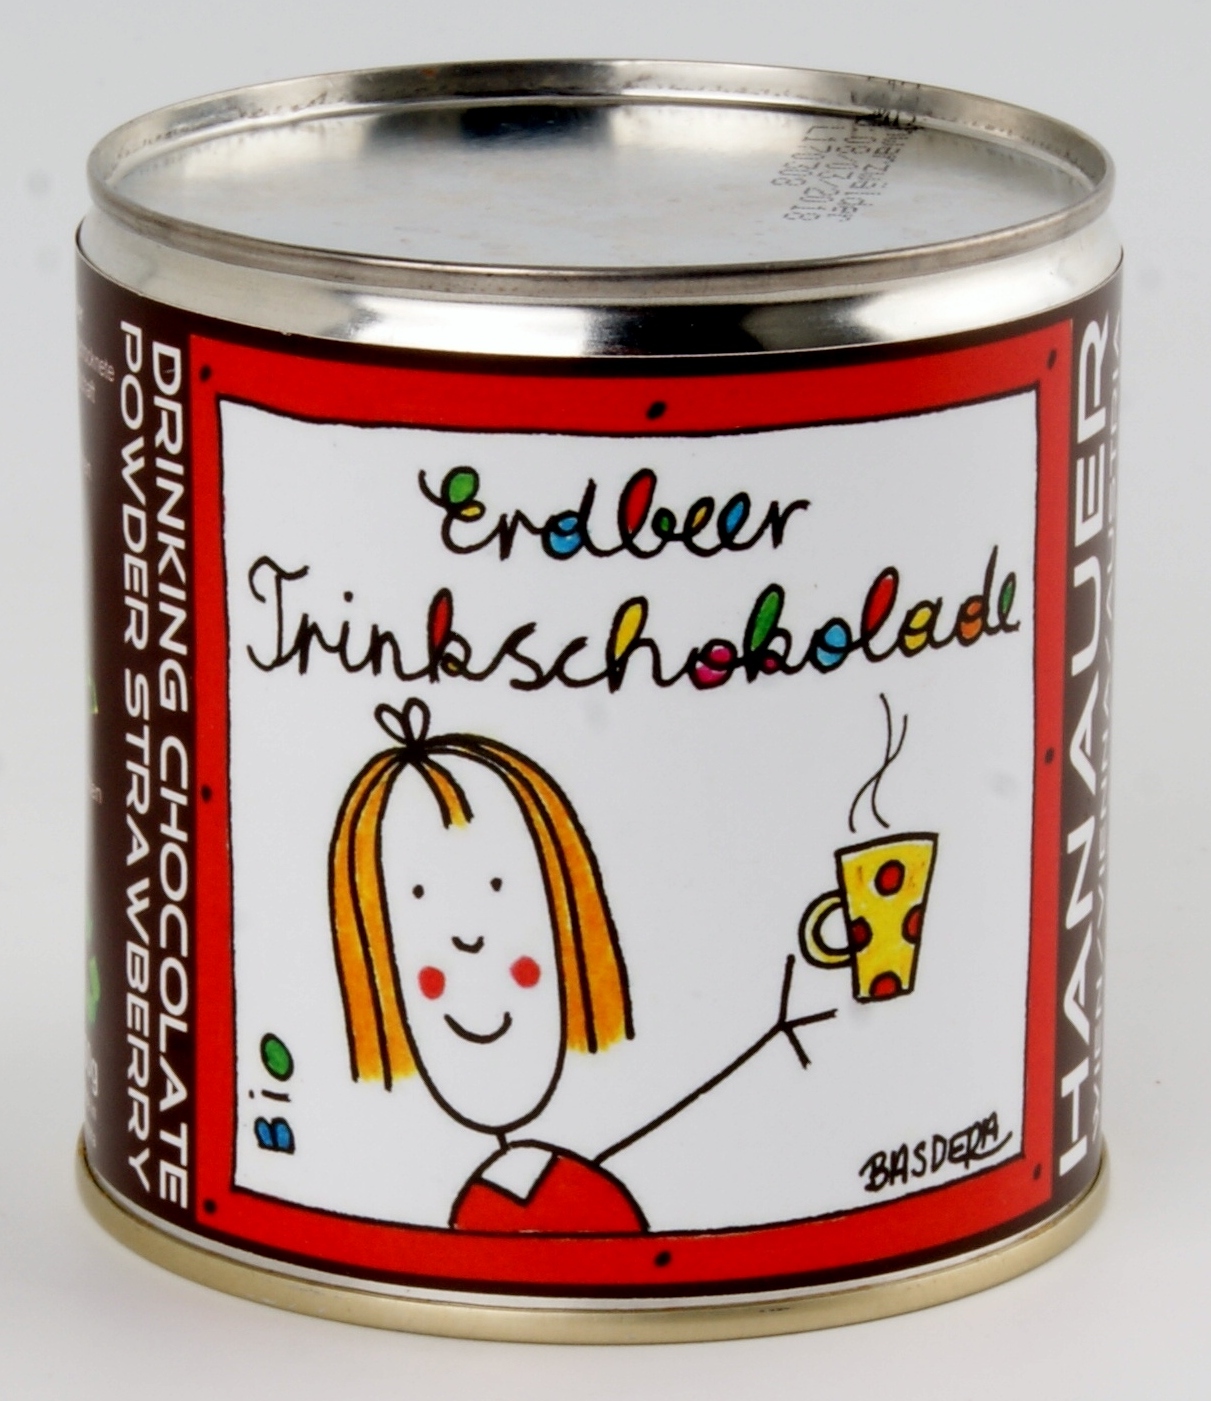 Bio Trink Schokolade Erdbeer-Knstler Edition-Neu